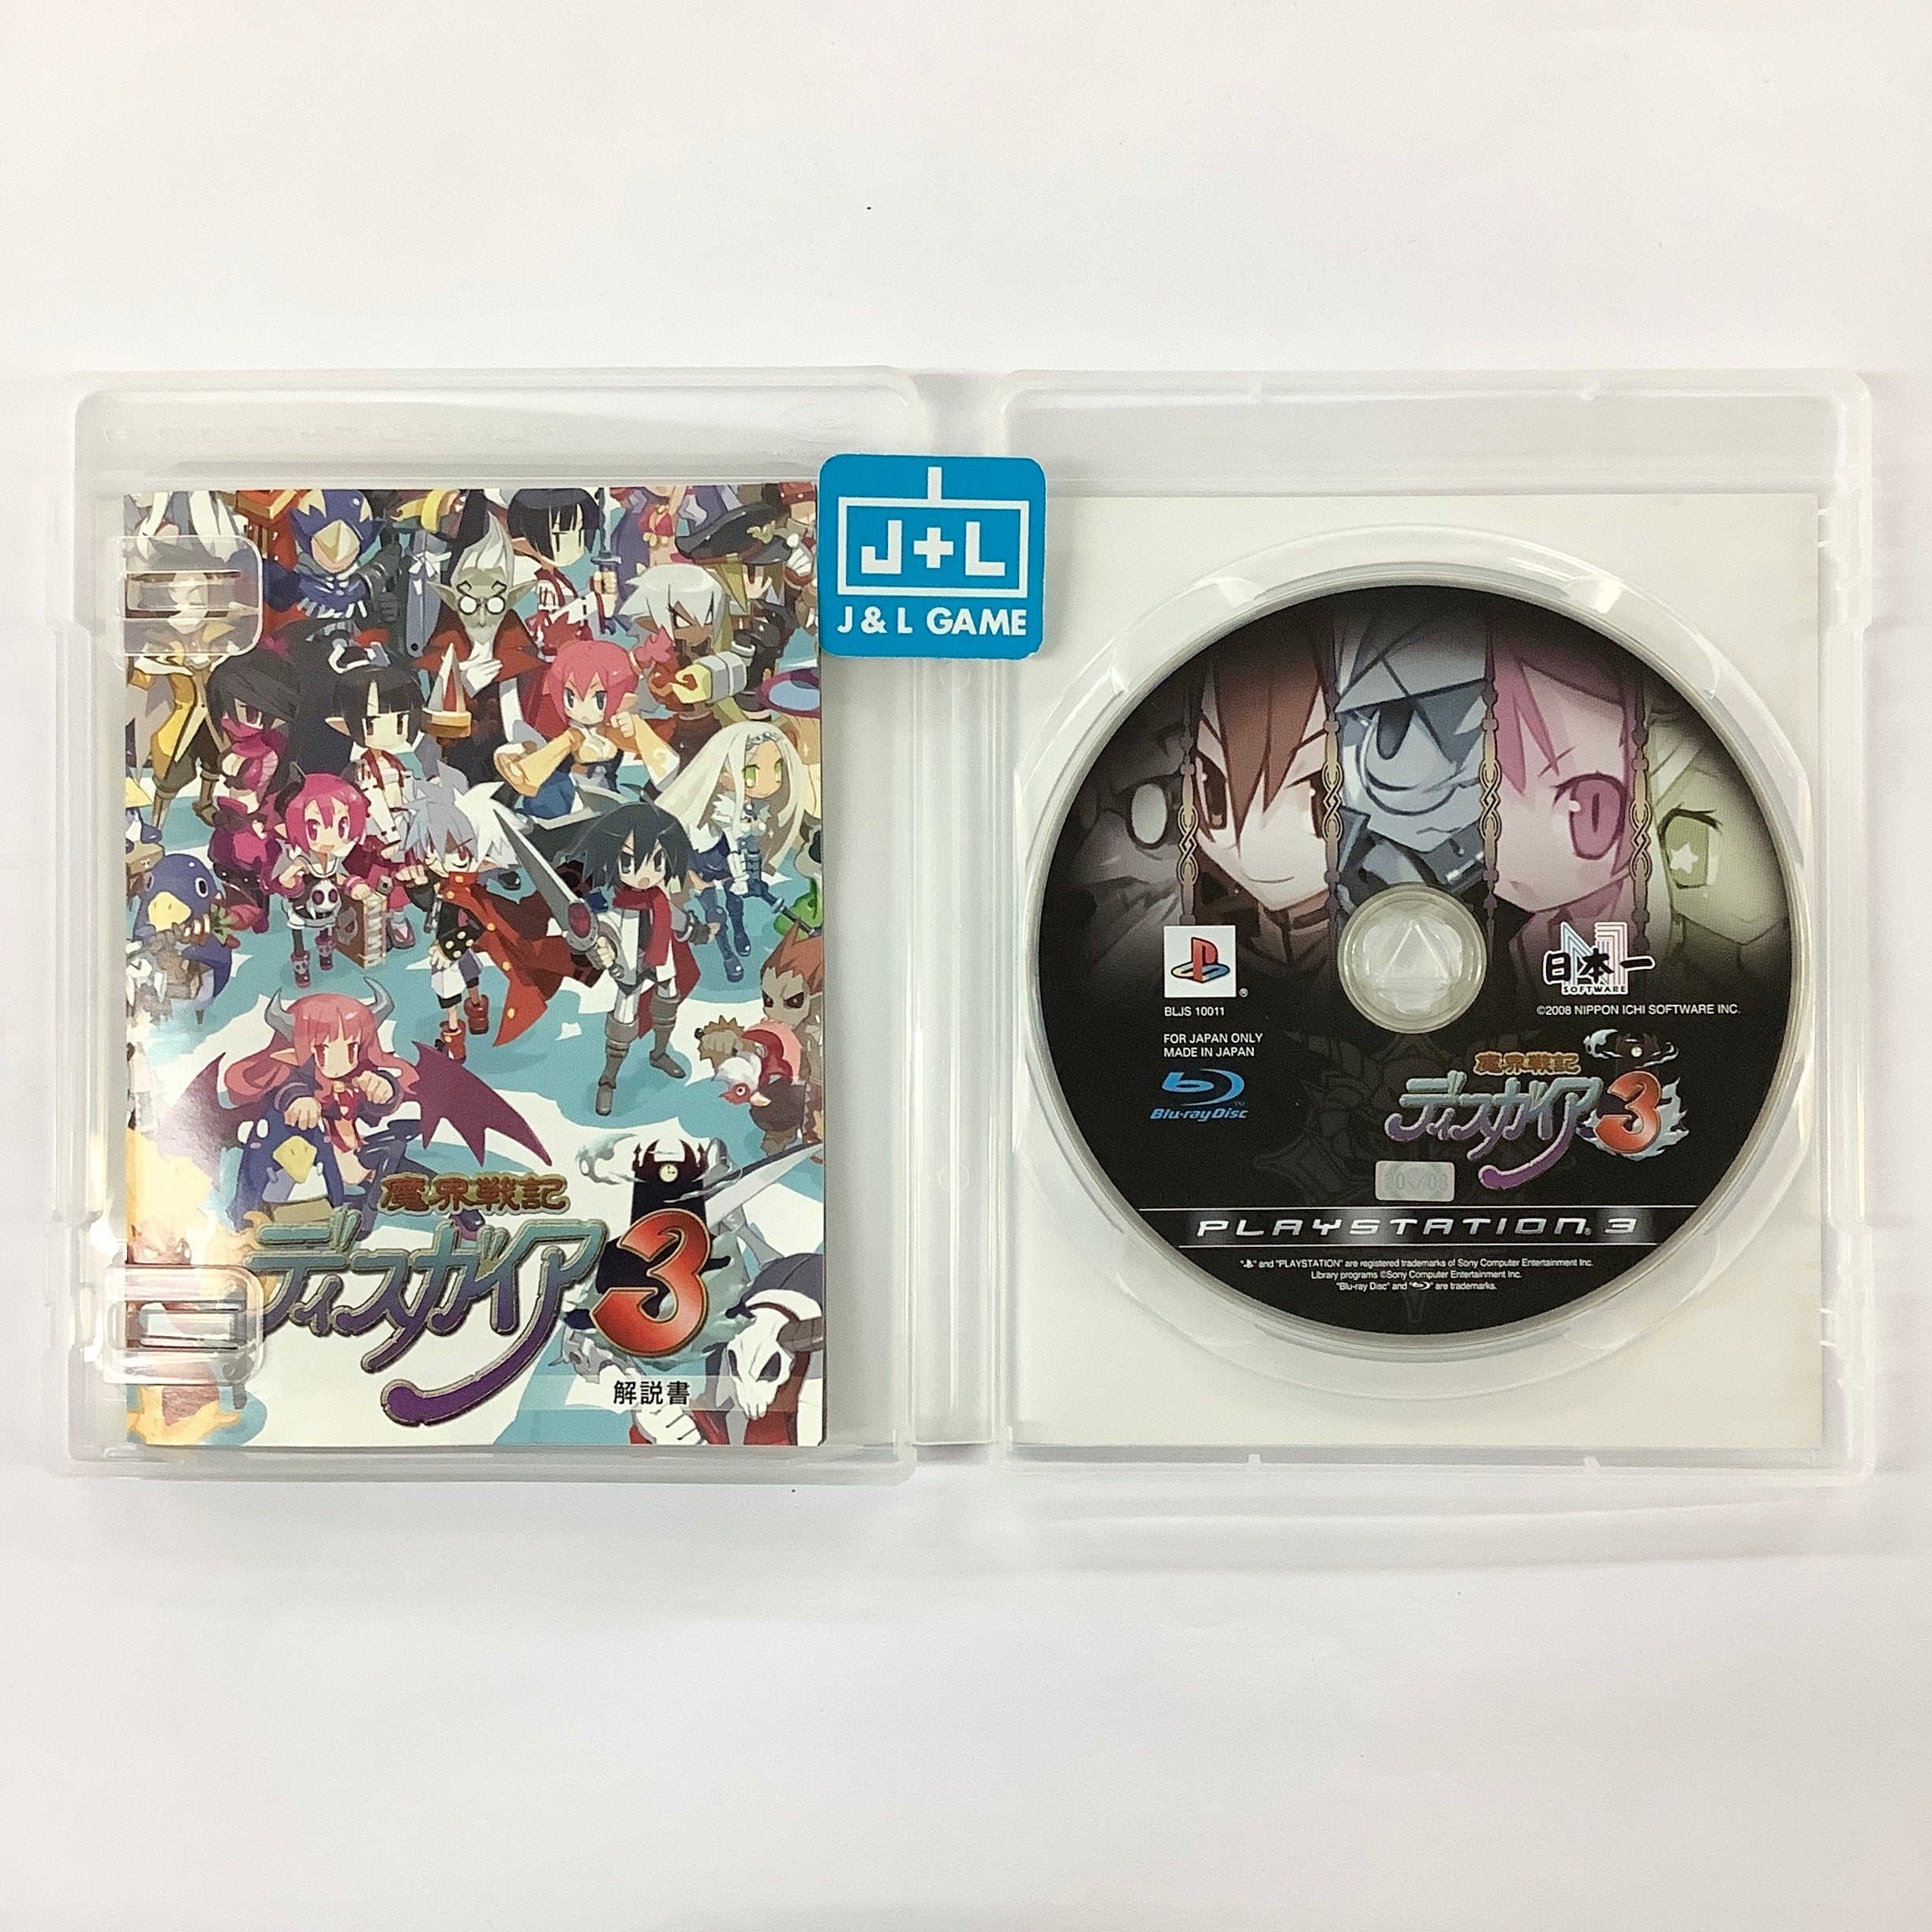 Makai Senki Disgaea 3 - (PS3) PlayStation 3 [Pre-Owned] (Japanese Import) Video Games Nippon Ichi Software   